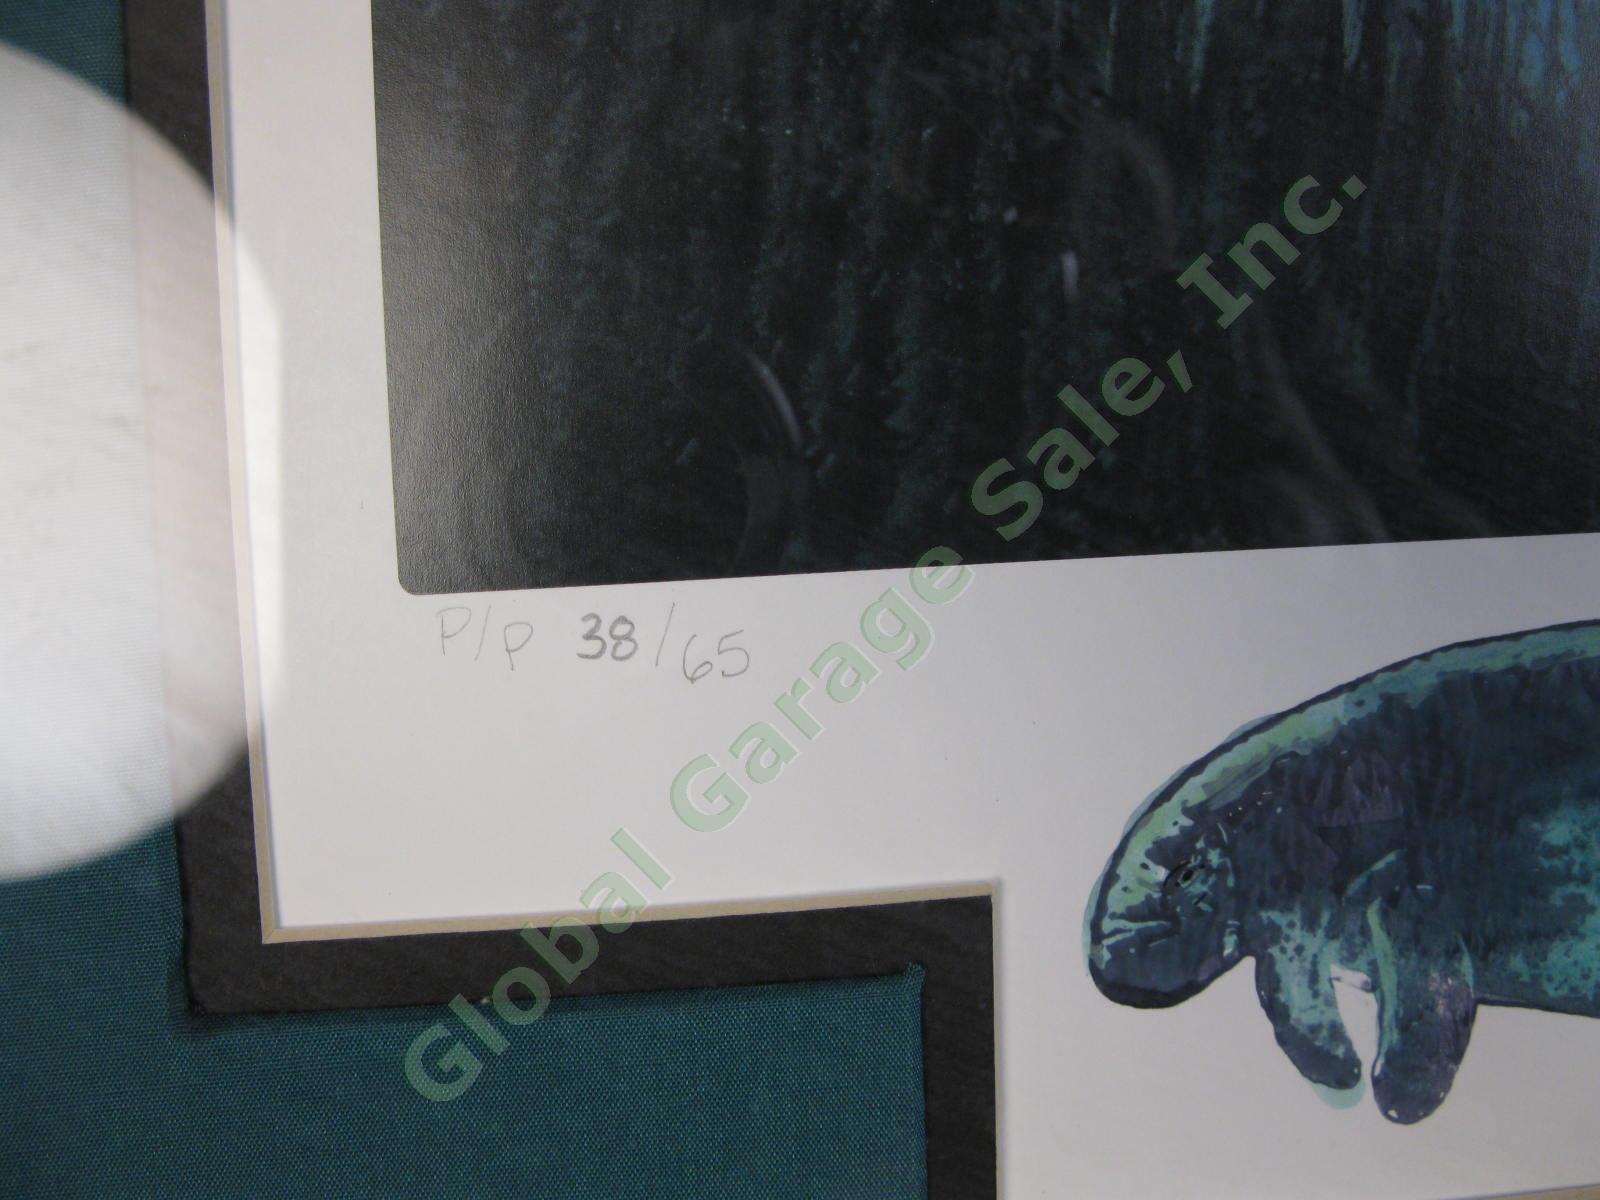 Endangered Manatees Robert Wyland Original SIGNED Limited Edition Print PP 38/65 2